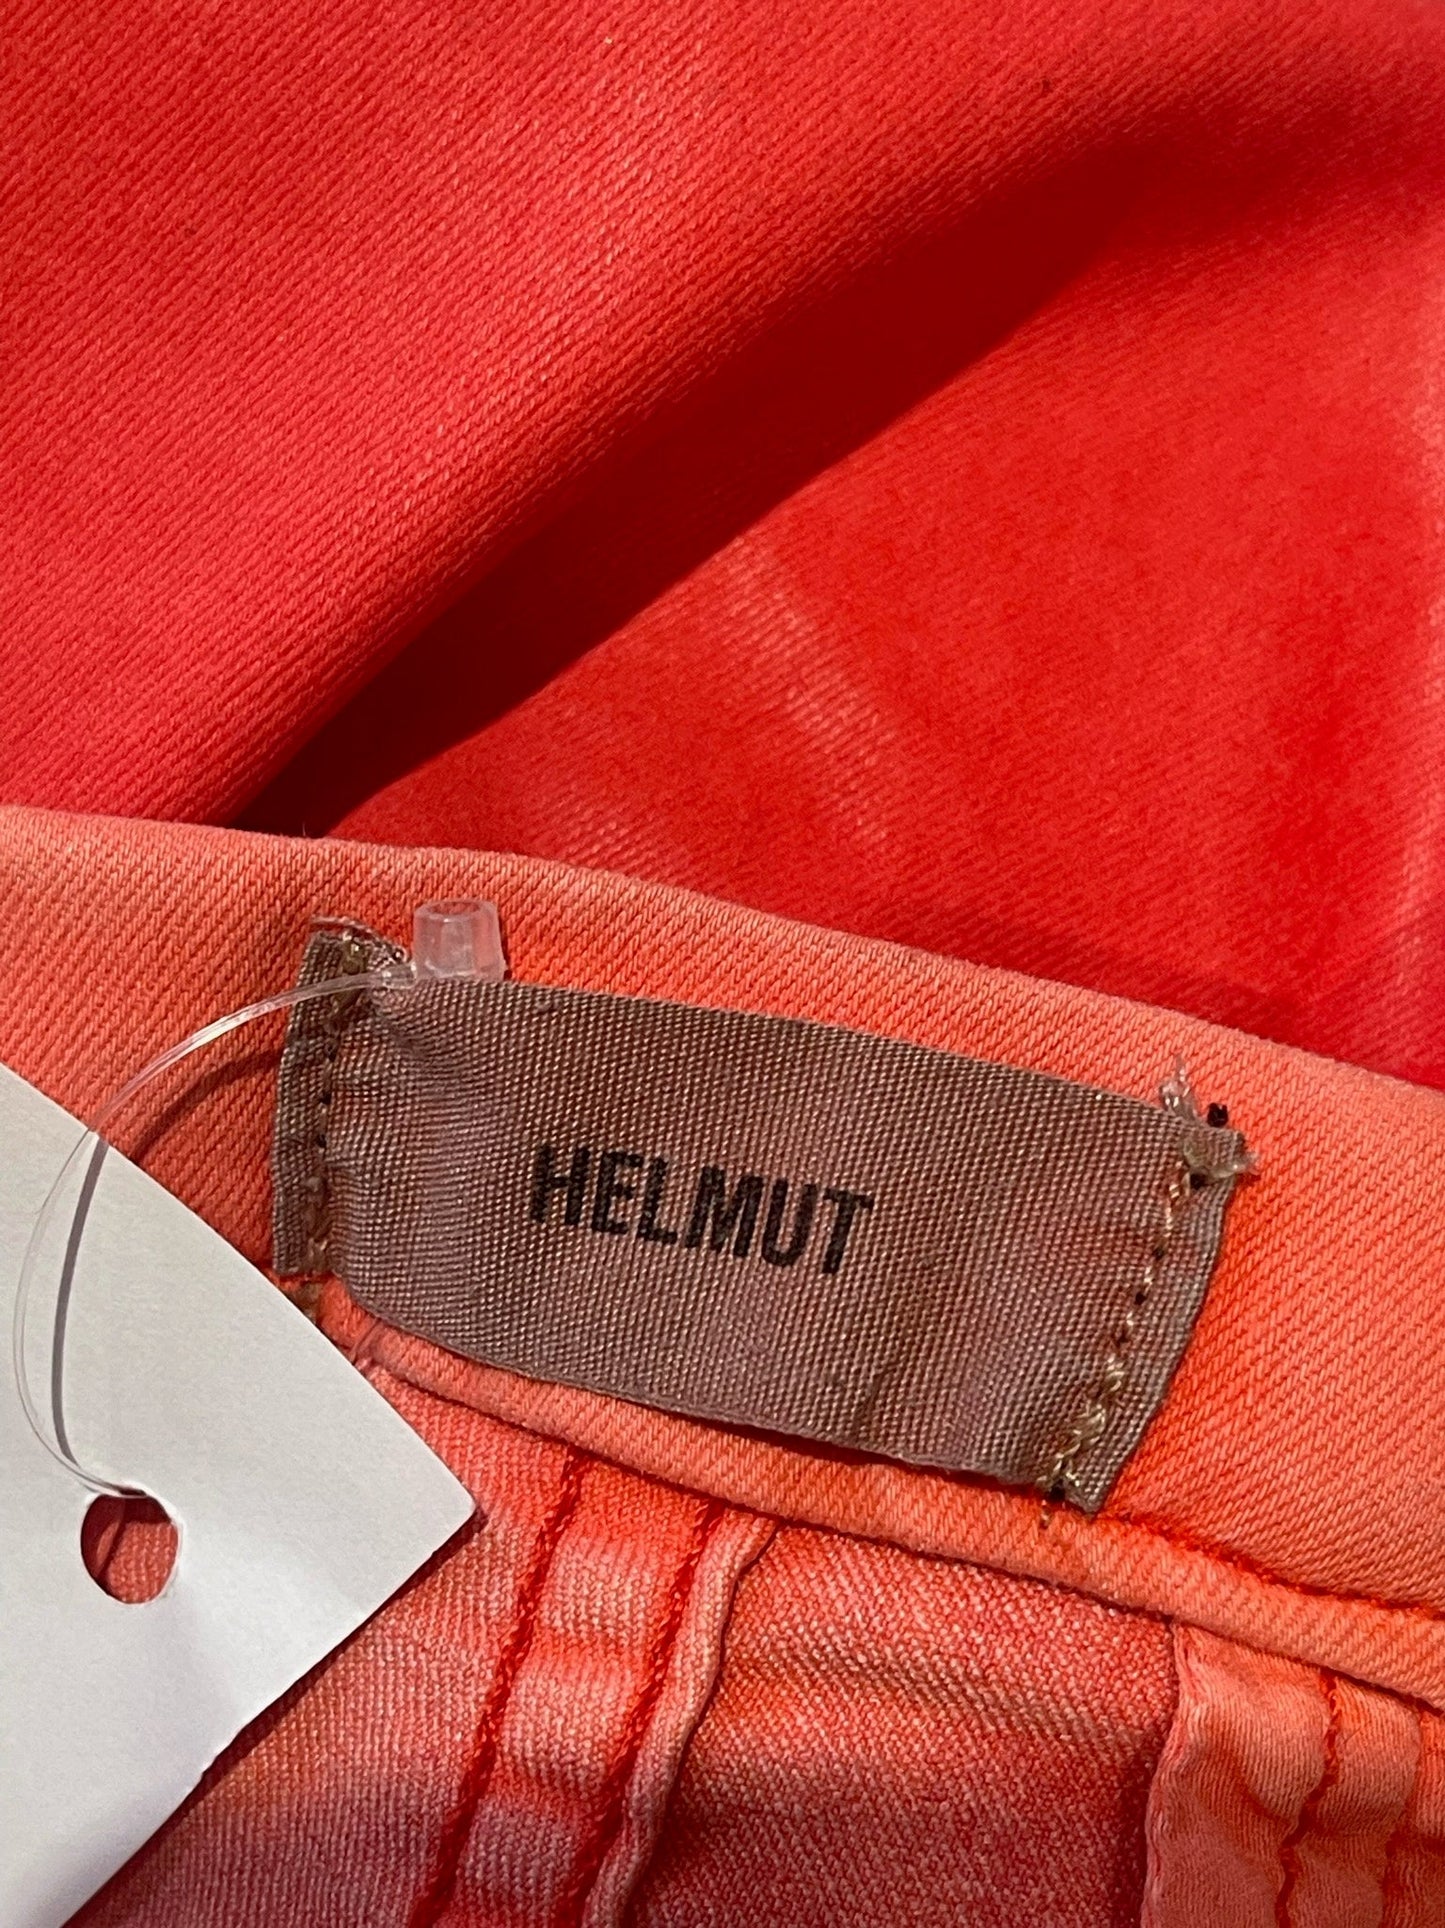 Pantalon Helmut Lang rouge T.28